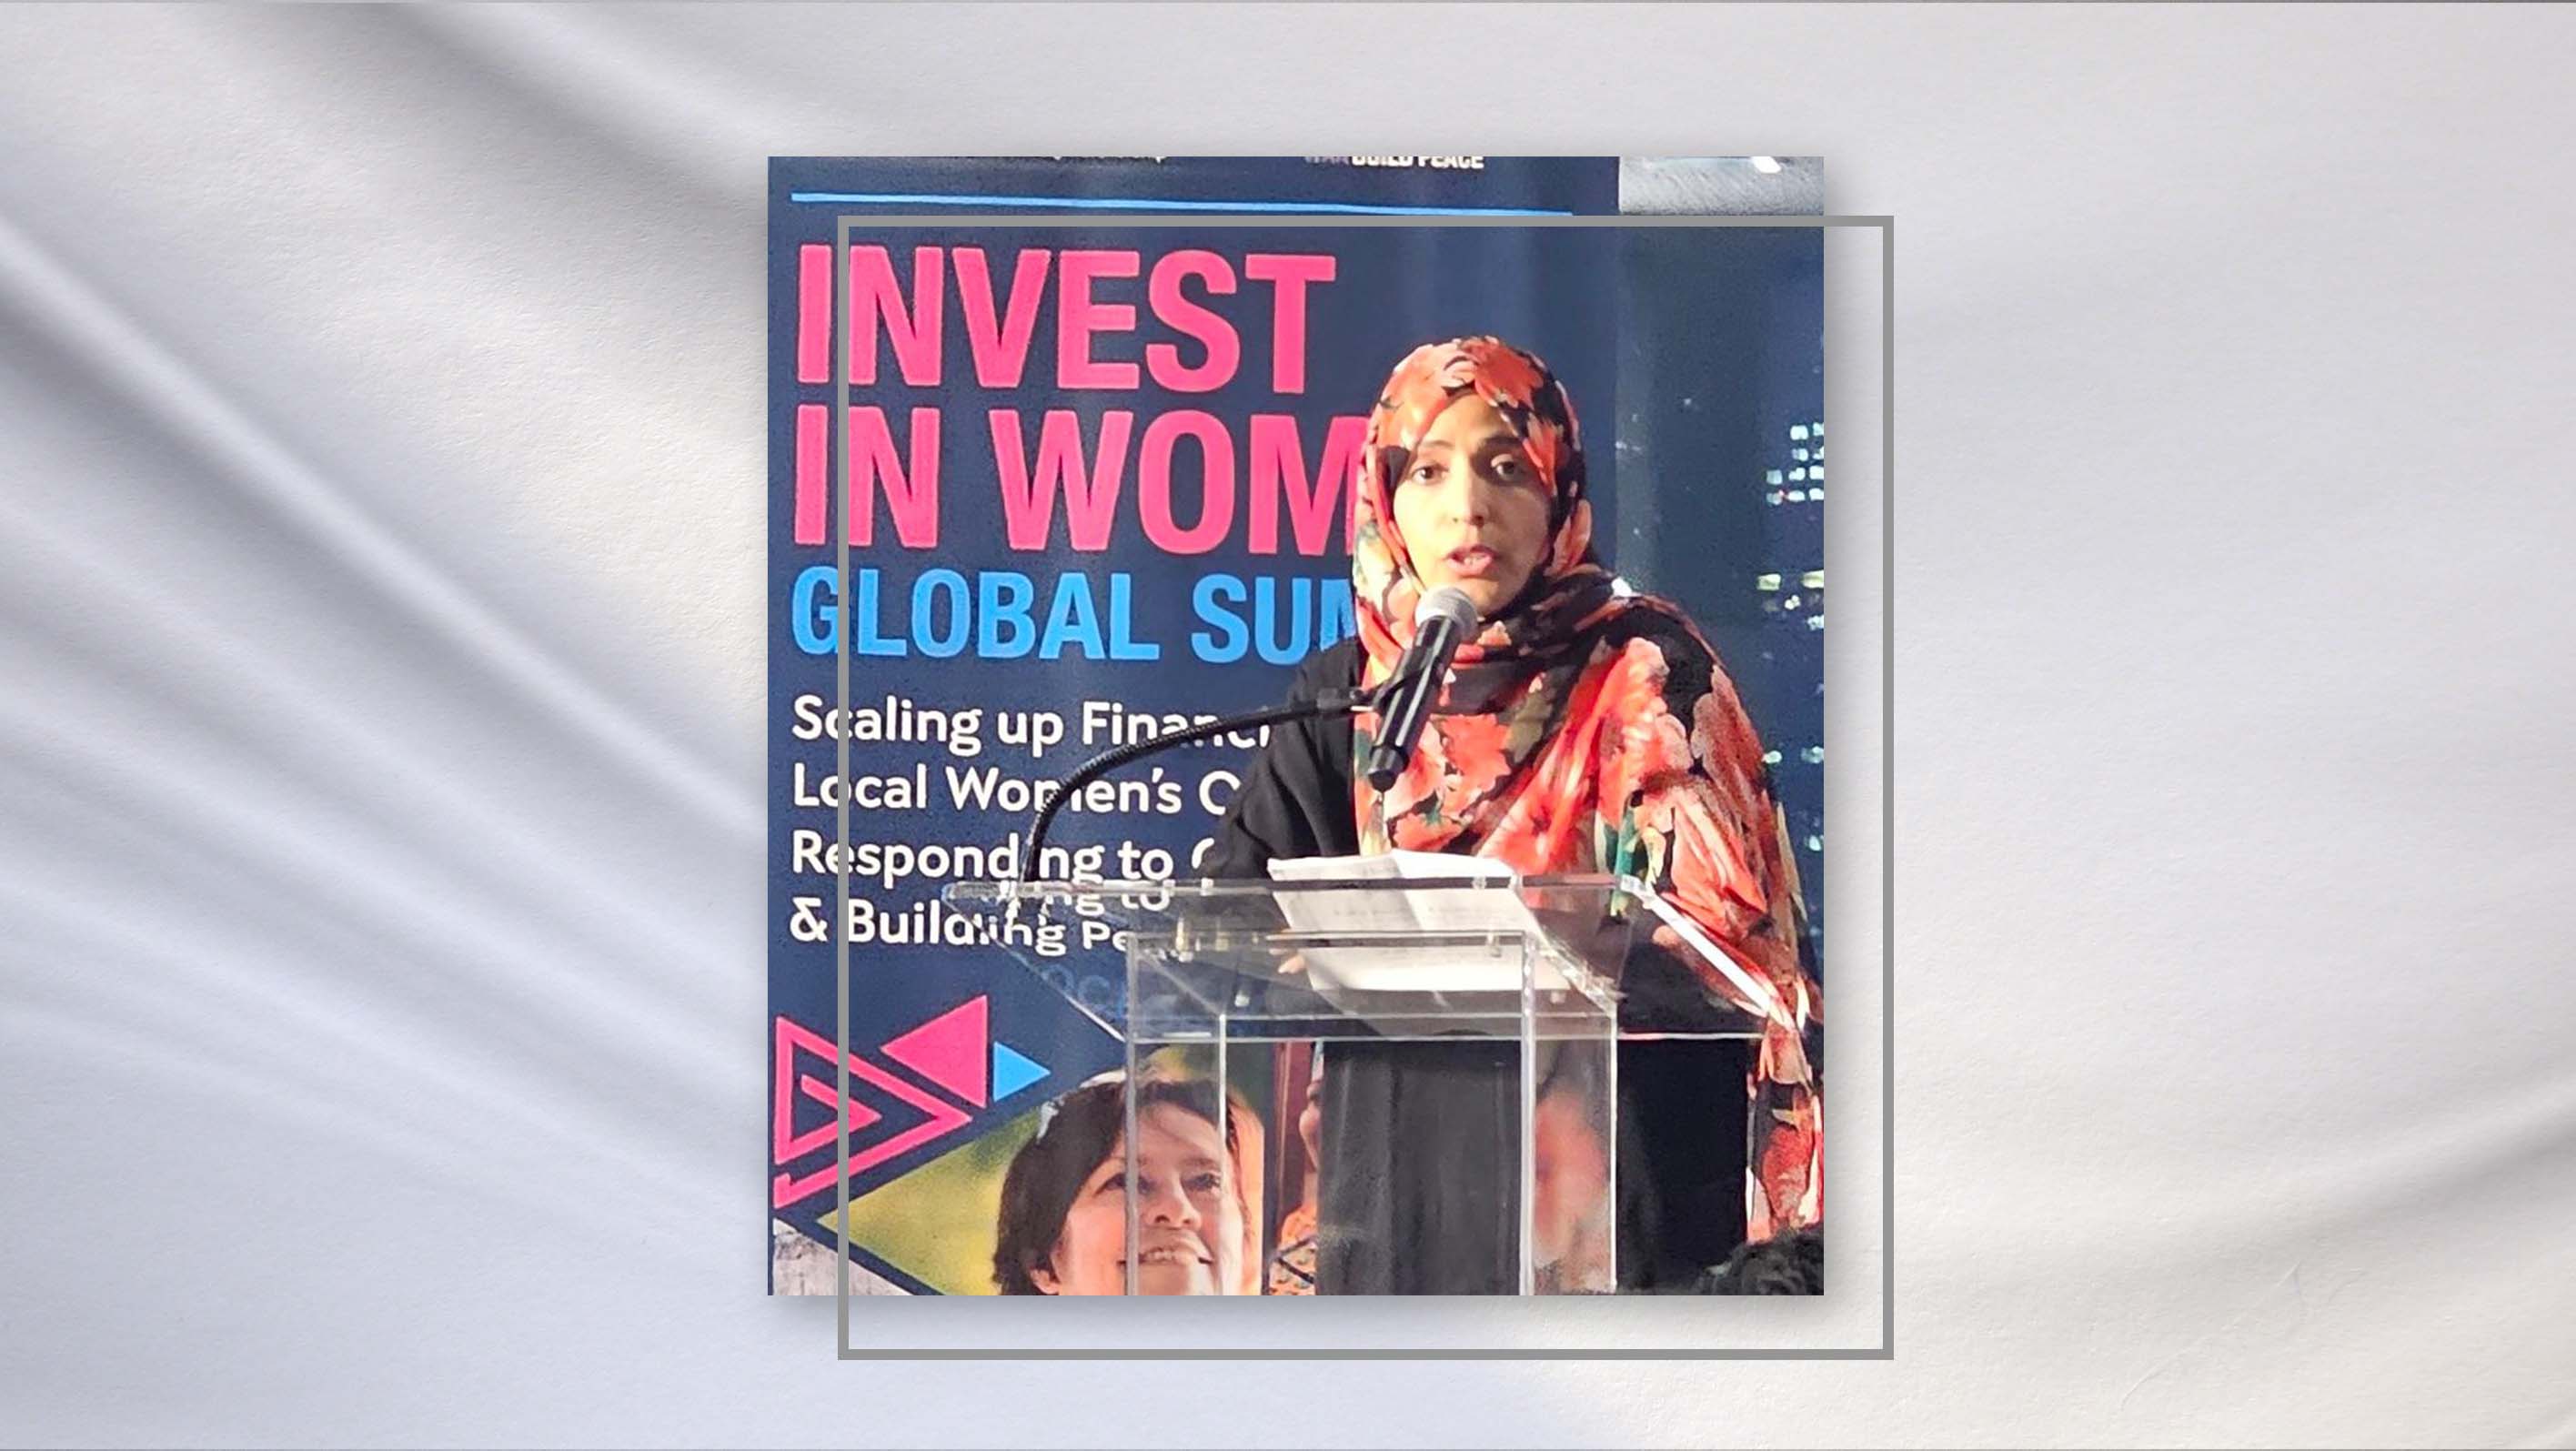 Mrs. Karman’s Speech at "Invest-In-Women" Global Summit at UN Headquarters